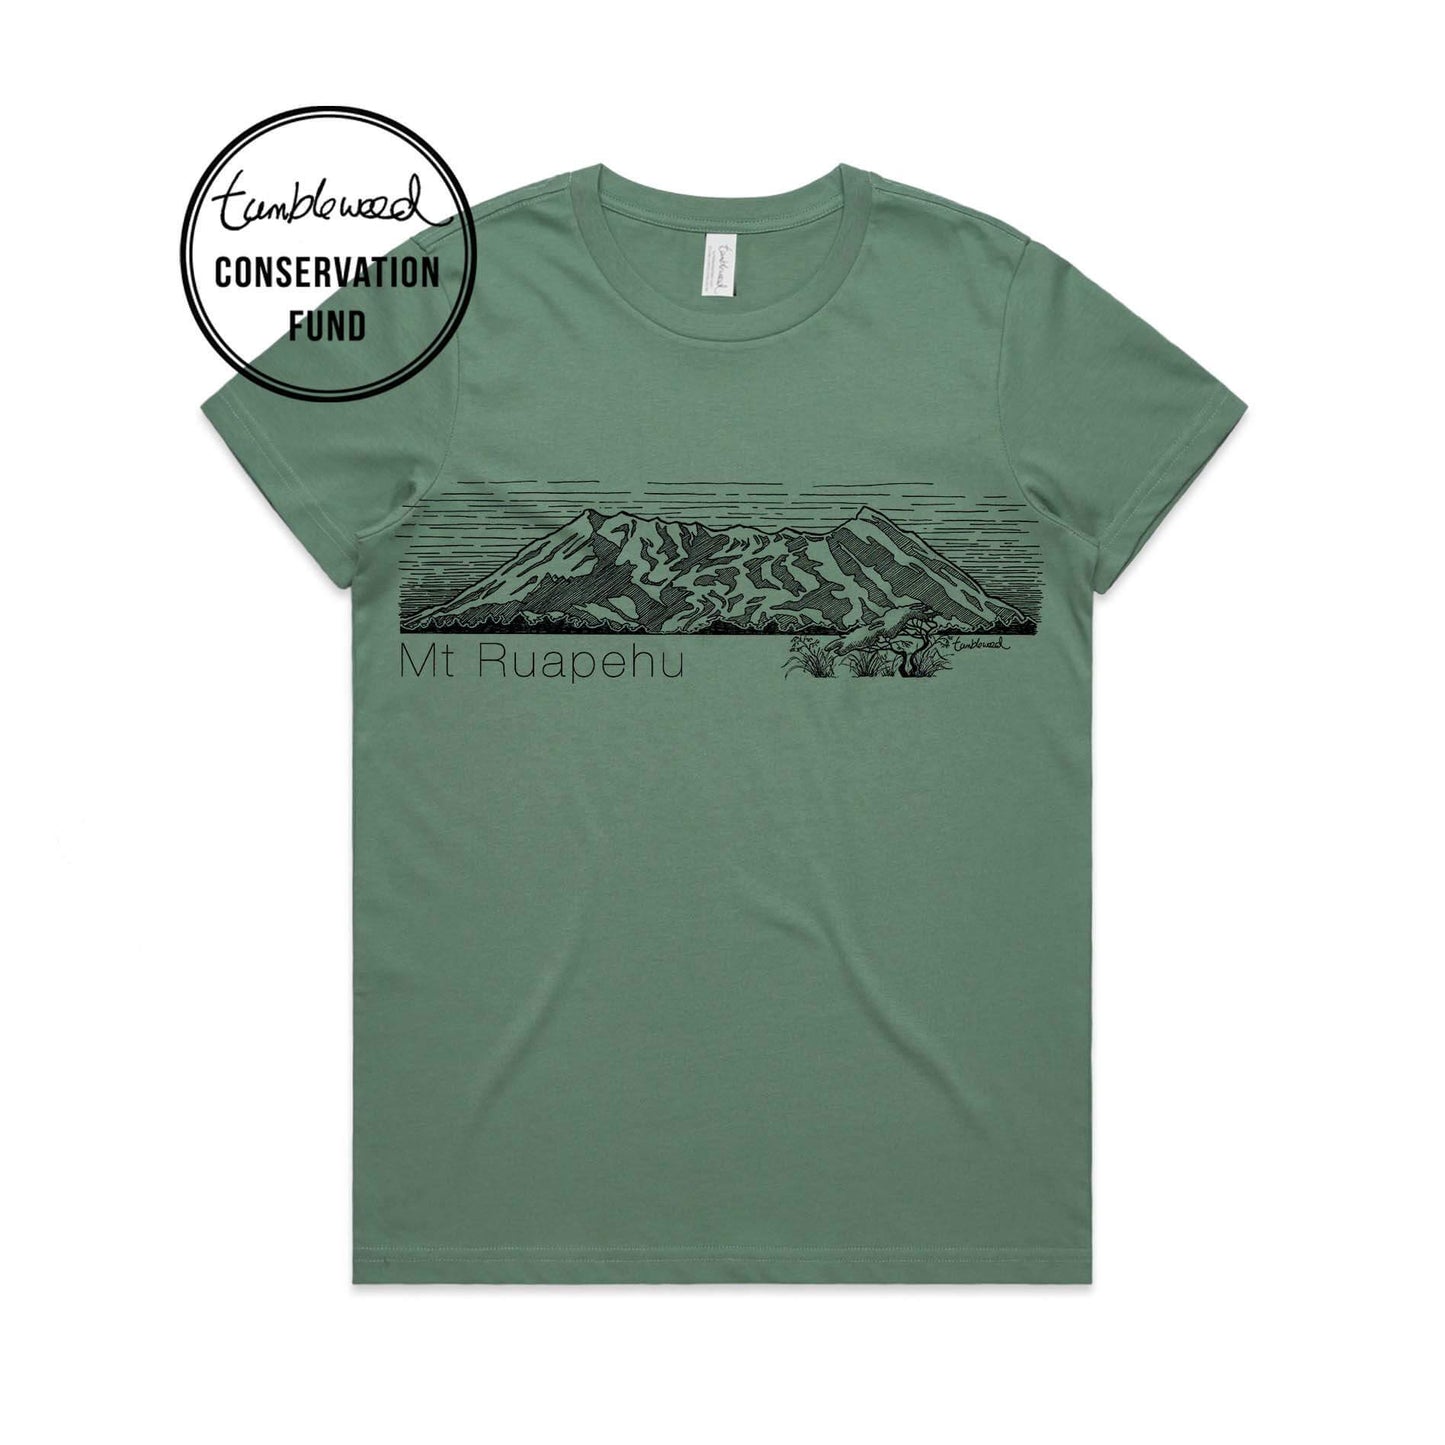 Mustard, male t-shirt featuring a screen printed Mt Ruapehu design.